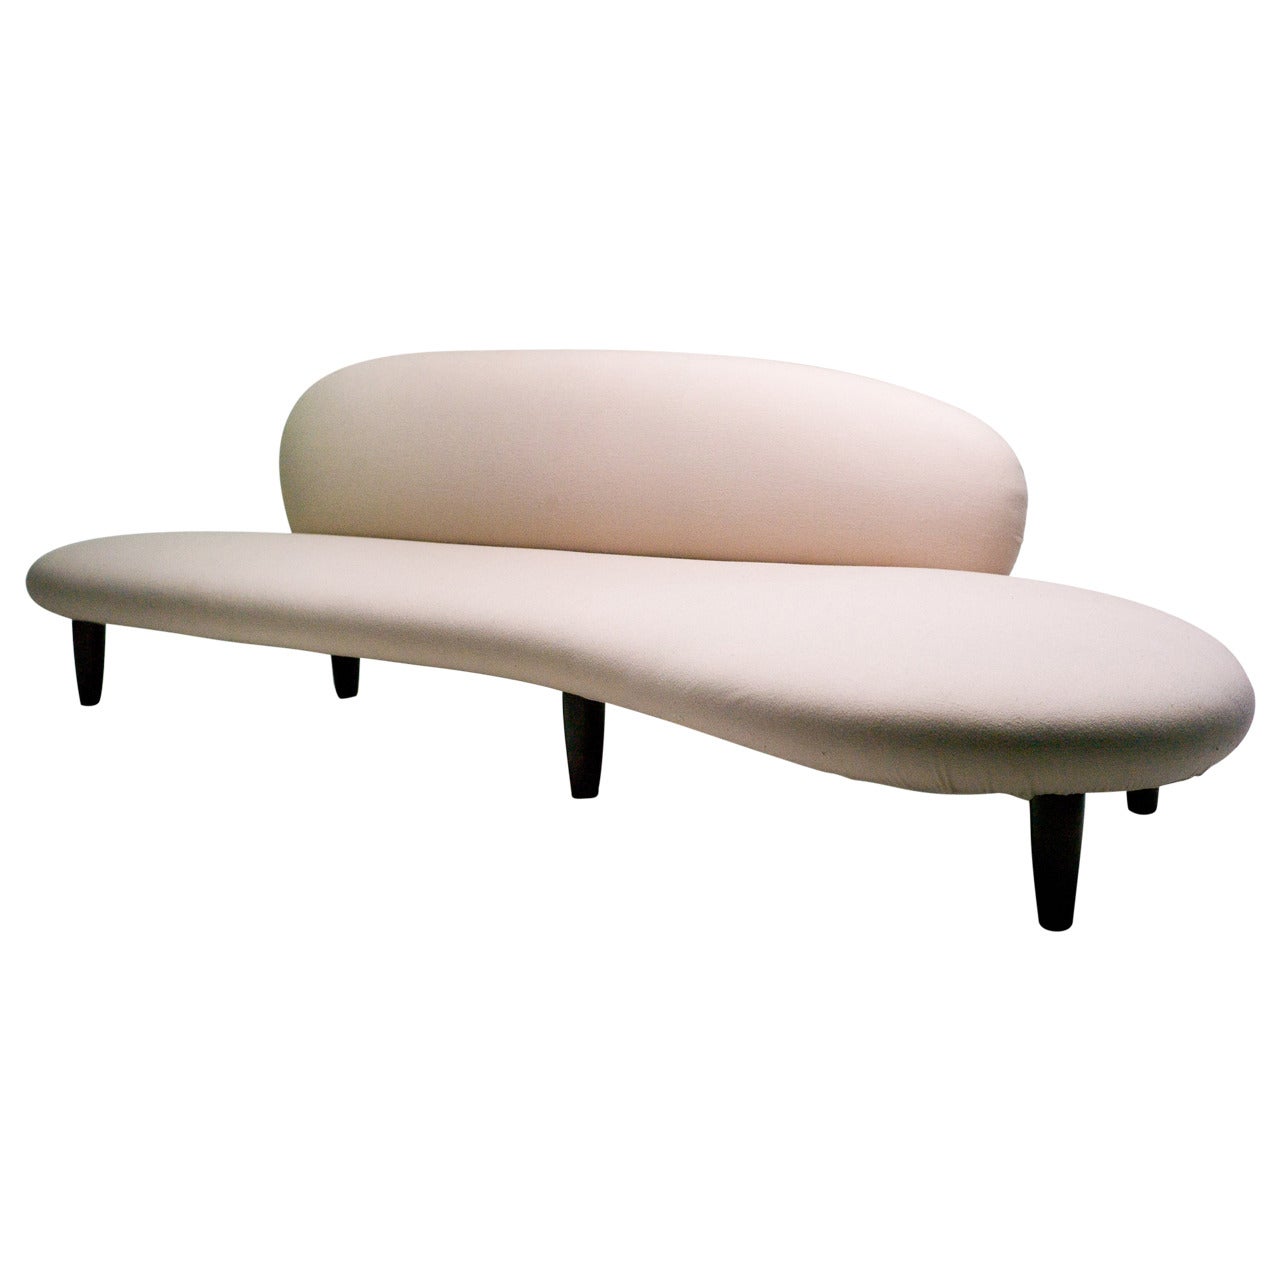 Freeform sofa by Isamu Noguchi for Vitra